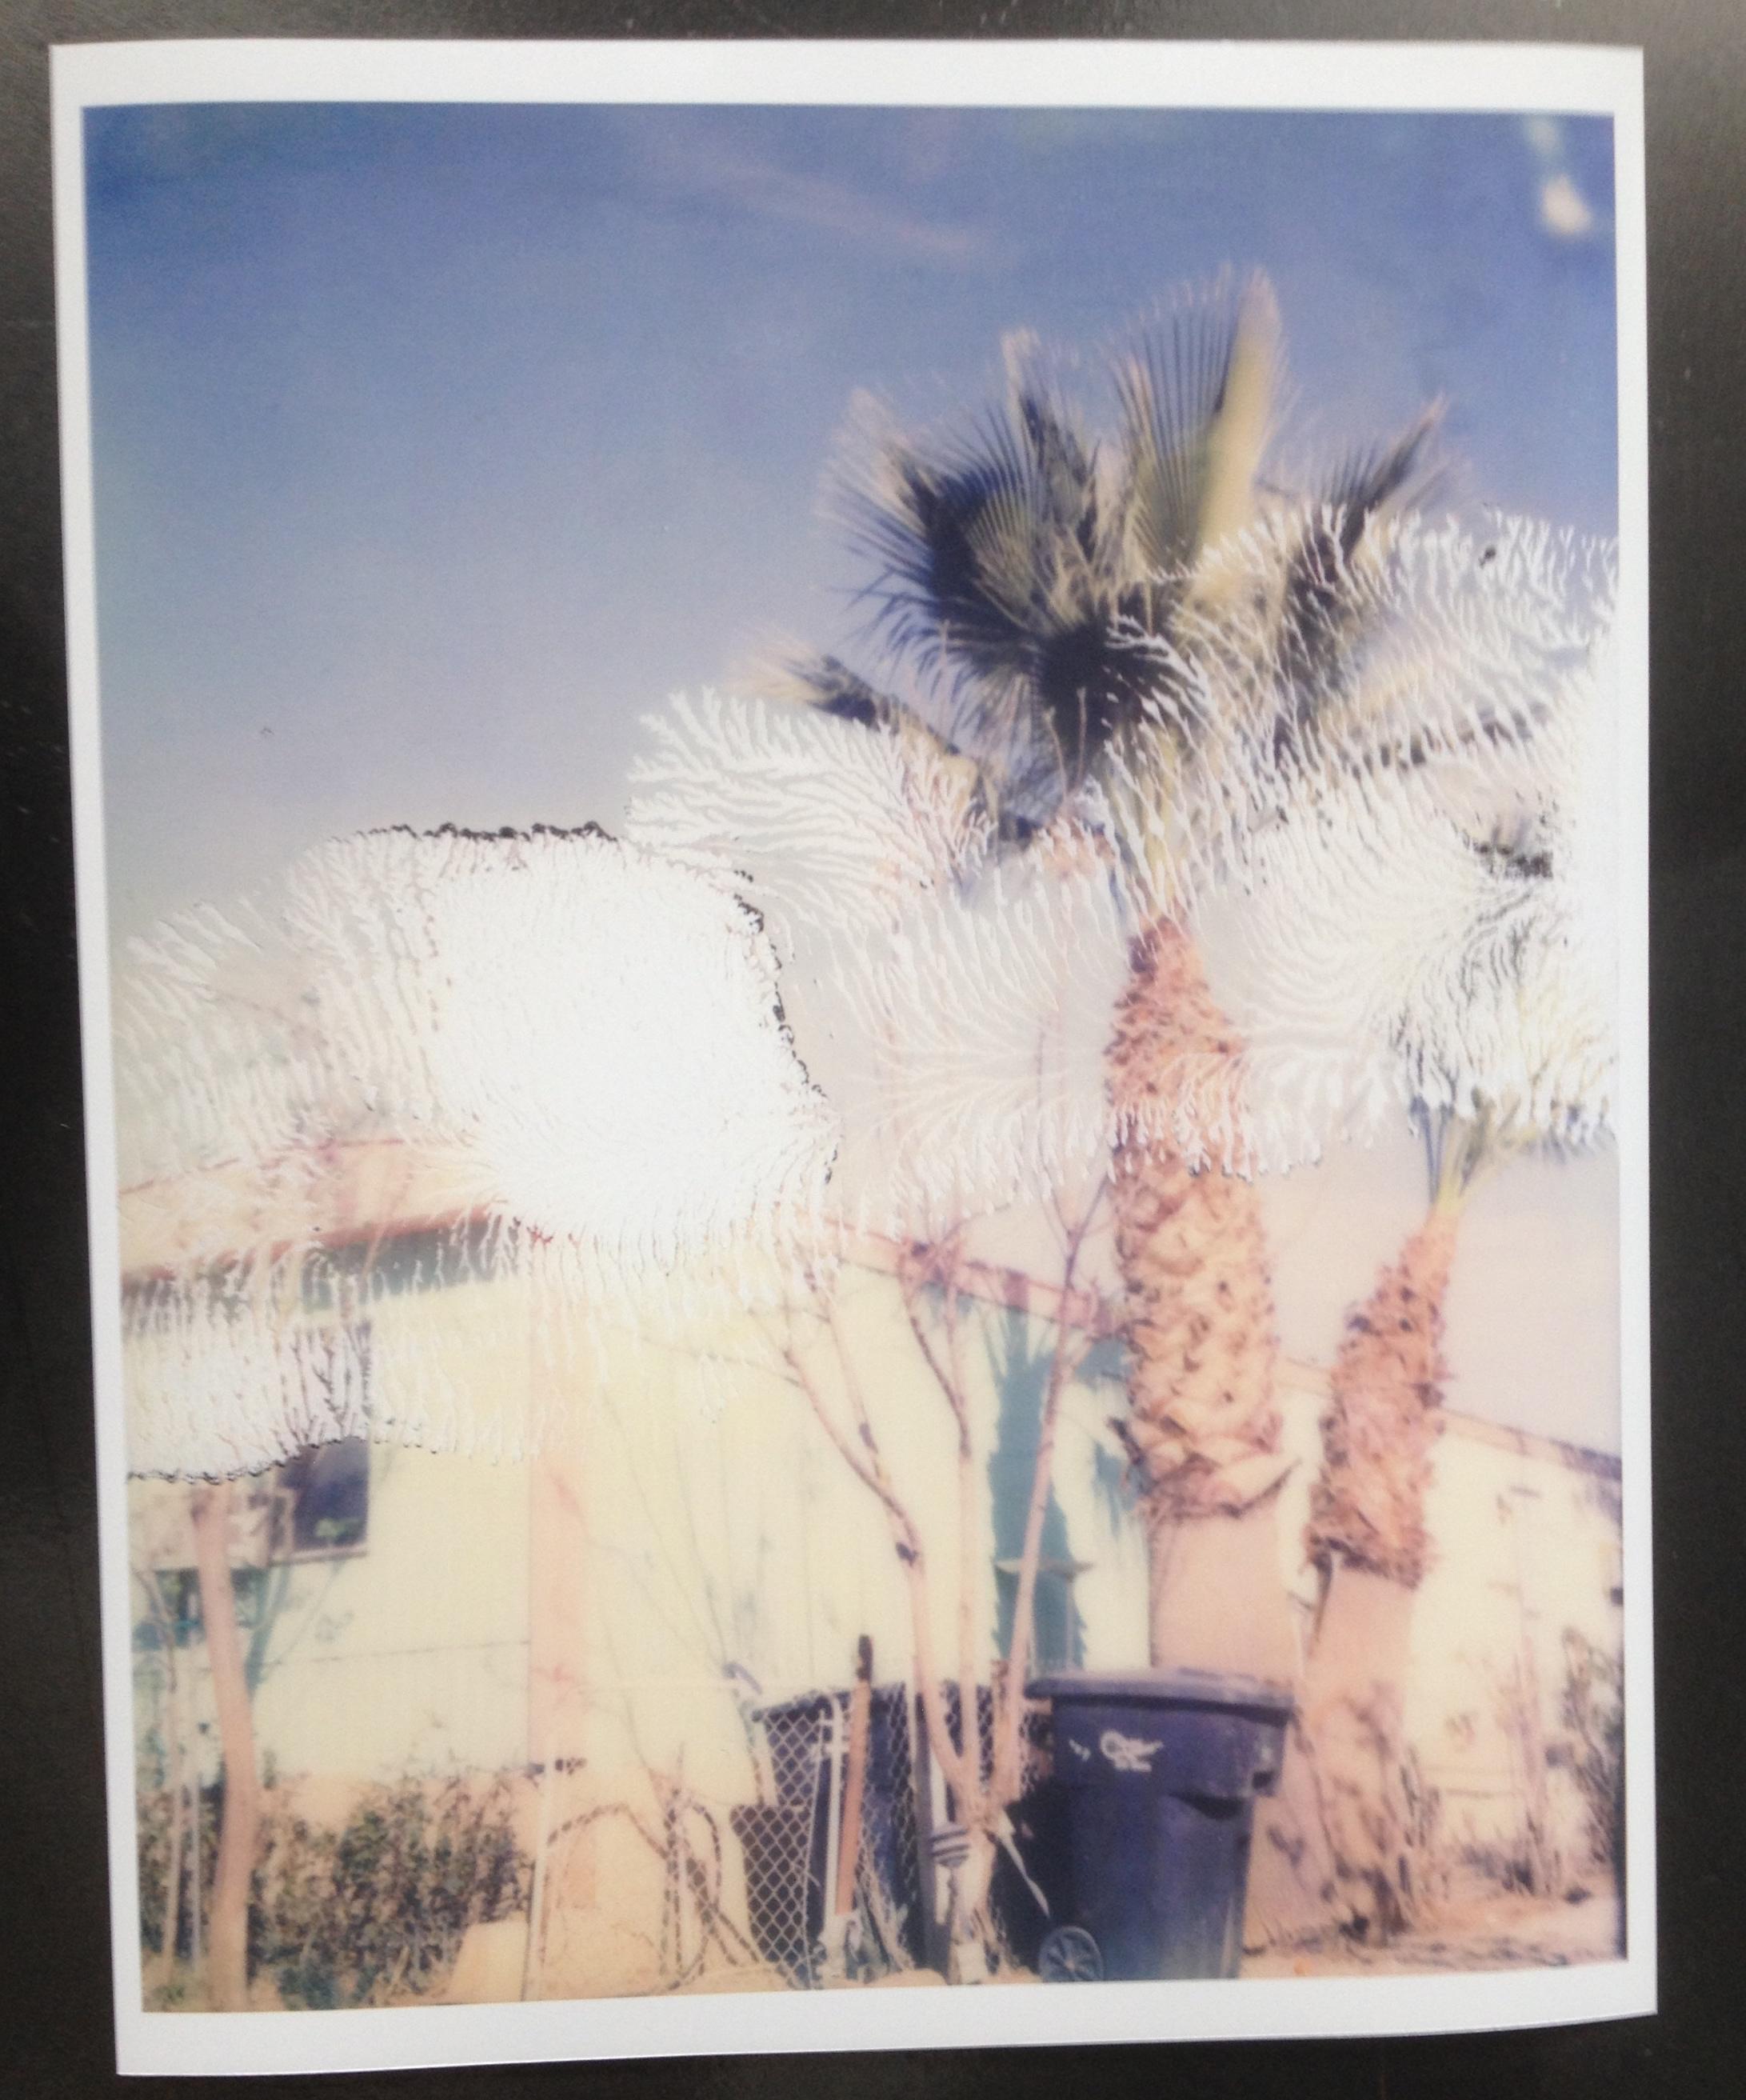 Borrego Springs (Californie Badlands) - Polaroid, XXIe siècle, contemporain - Photograph de Stefanie Schneider